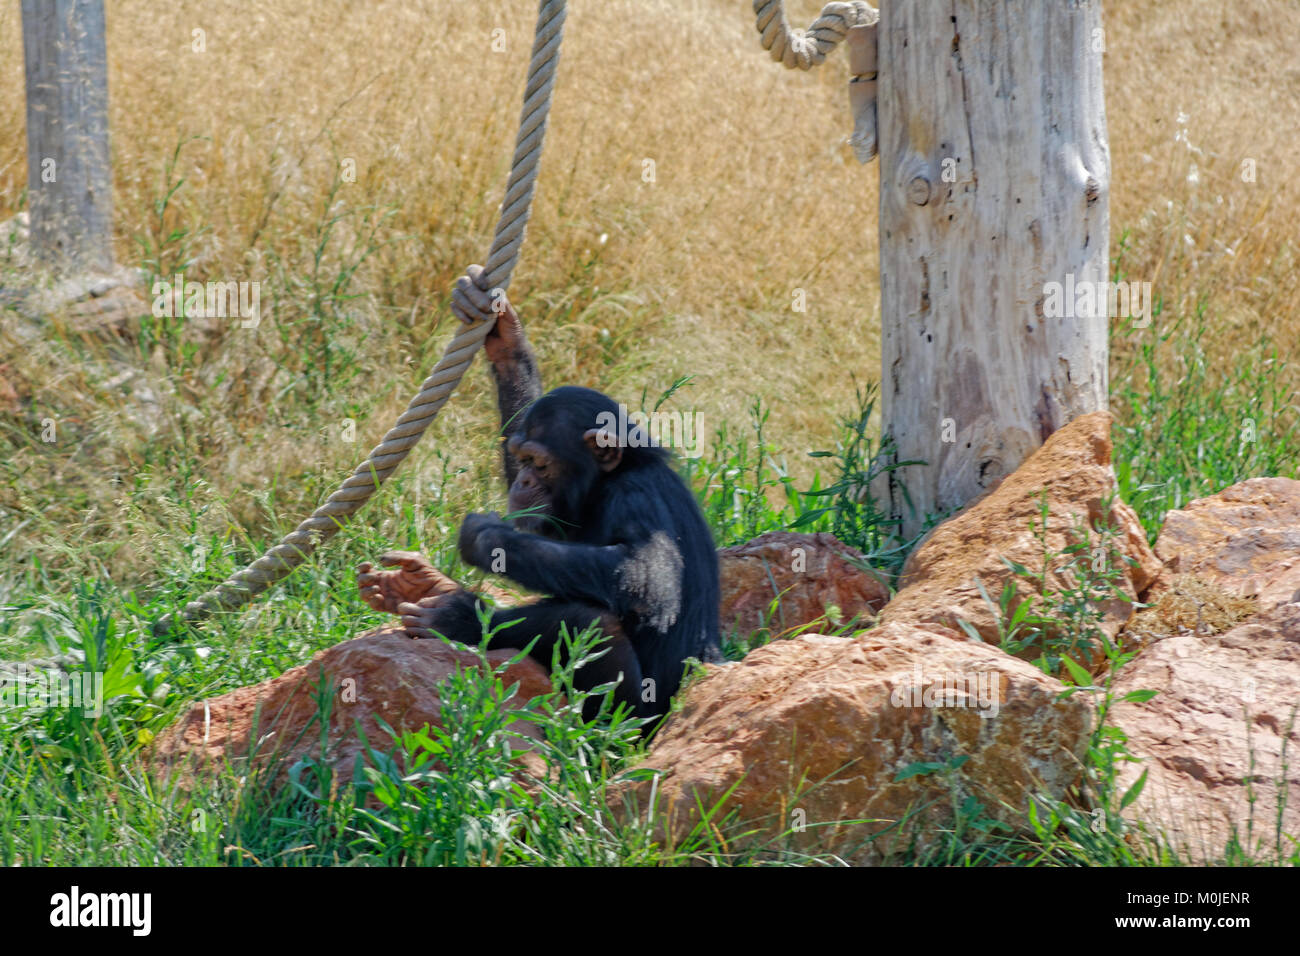 Chimpanzee holding rope Stock Photo